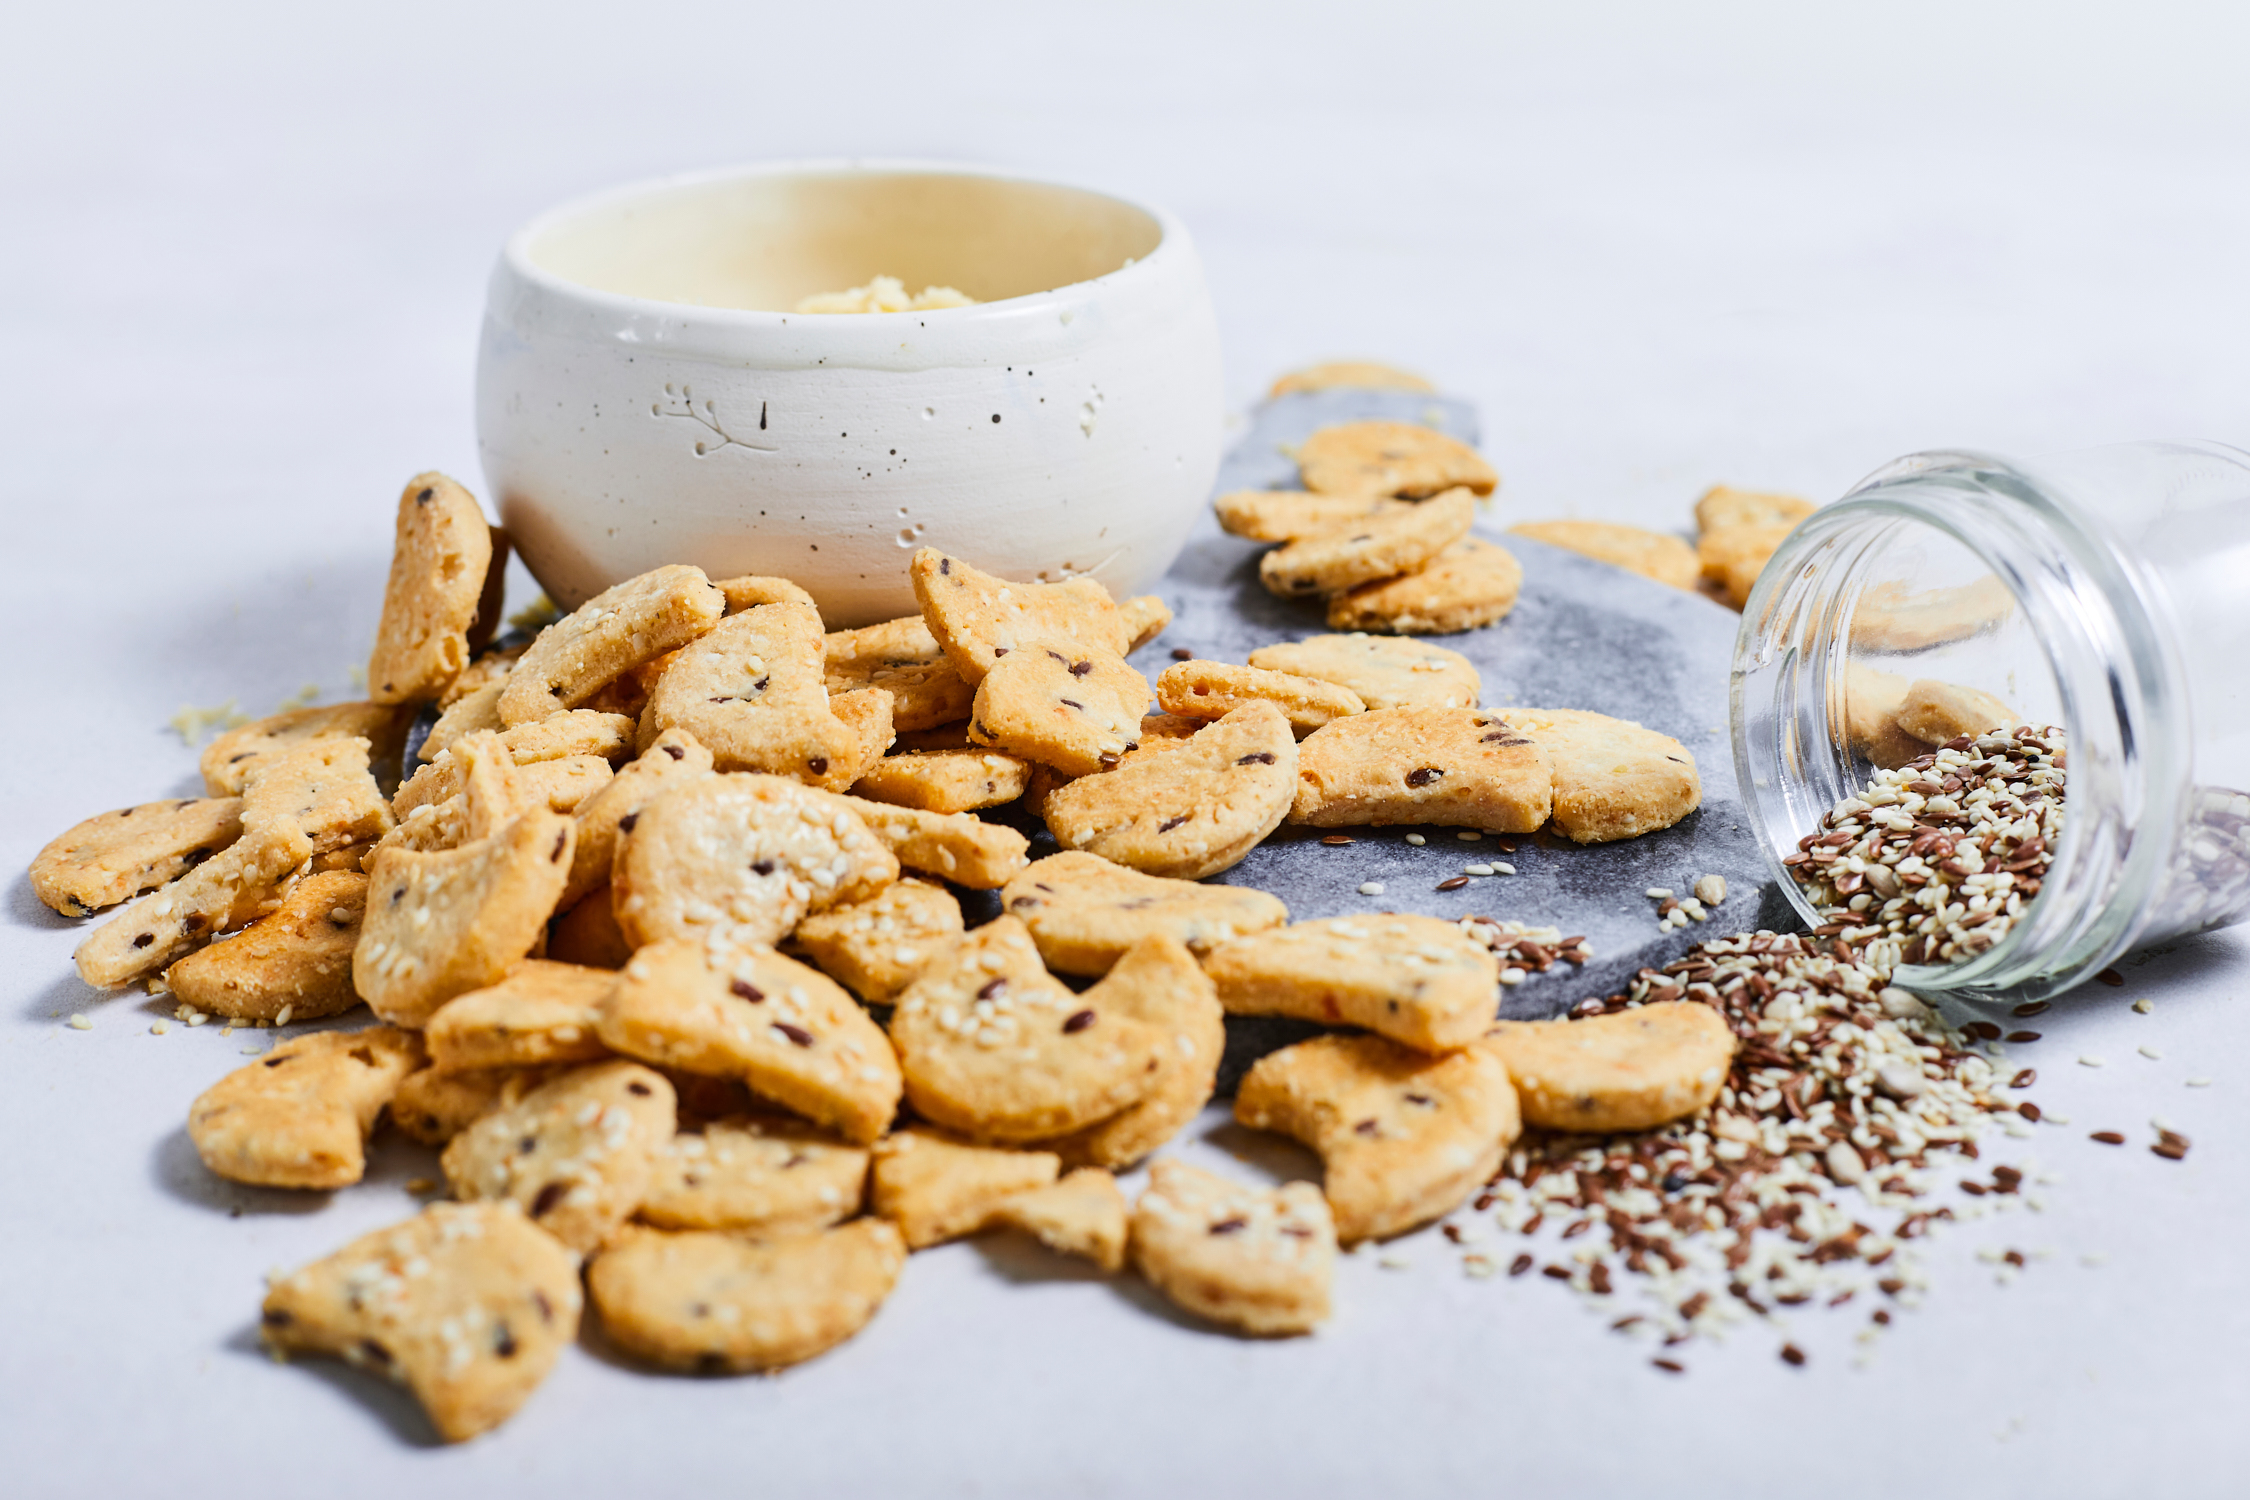 Butter Cookies with Cheese "Mēnestiņi" (“Moons”)